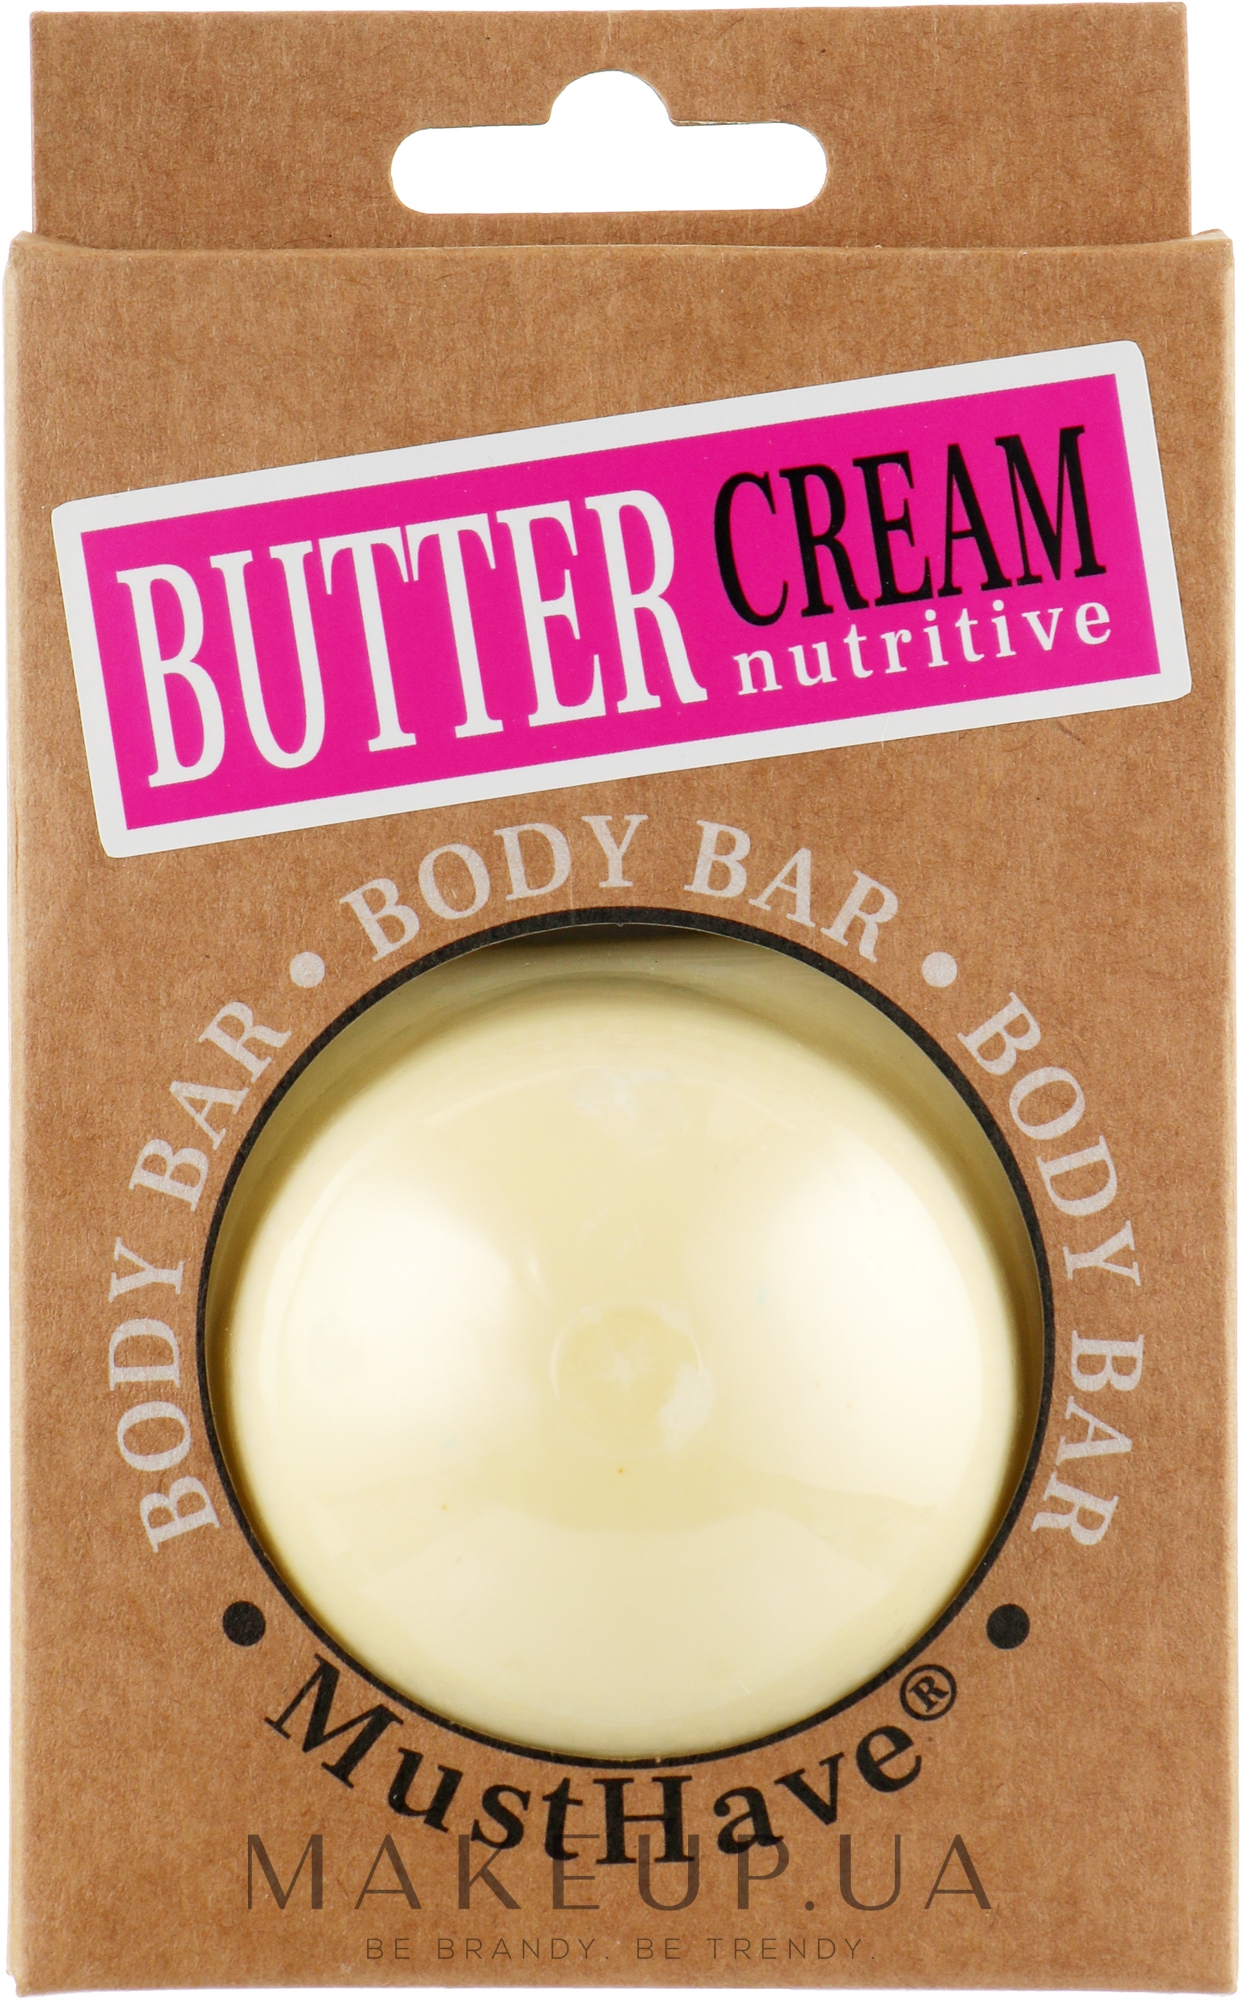 Твердое крем–масло для тела - Flory Spray Must Have Butter Cream Body Bar — фото 60g